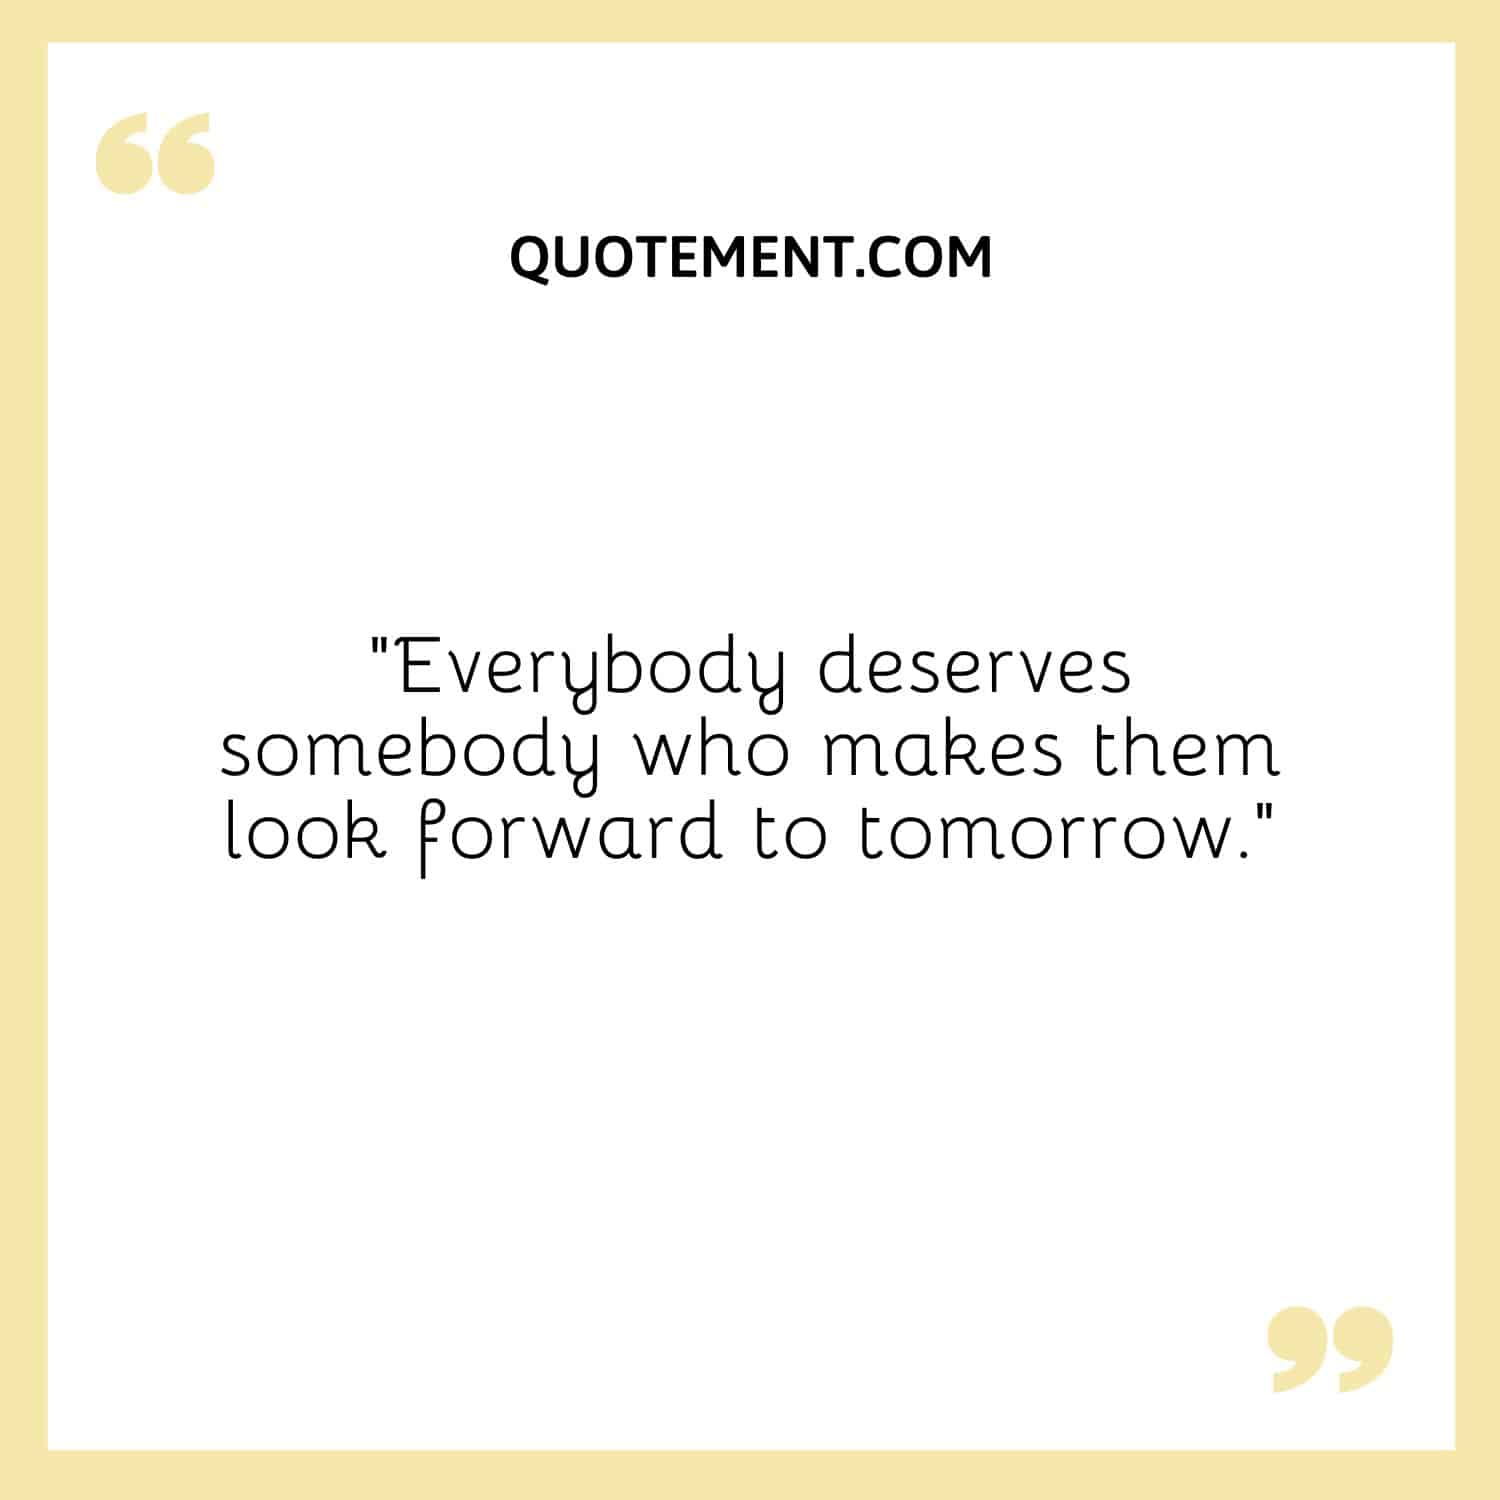 Everybody deserves somebody who makes them look forward to tomorrow.